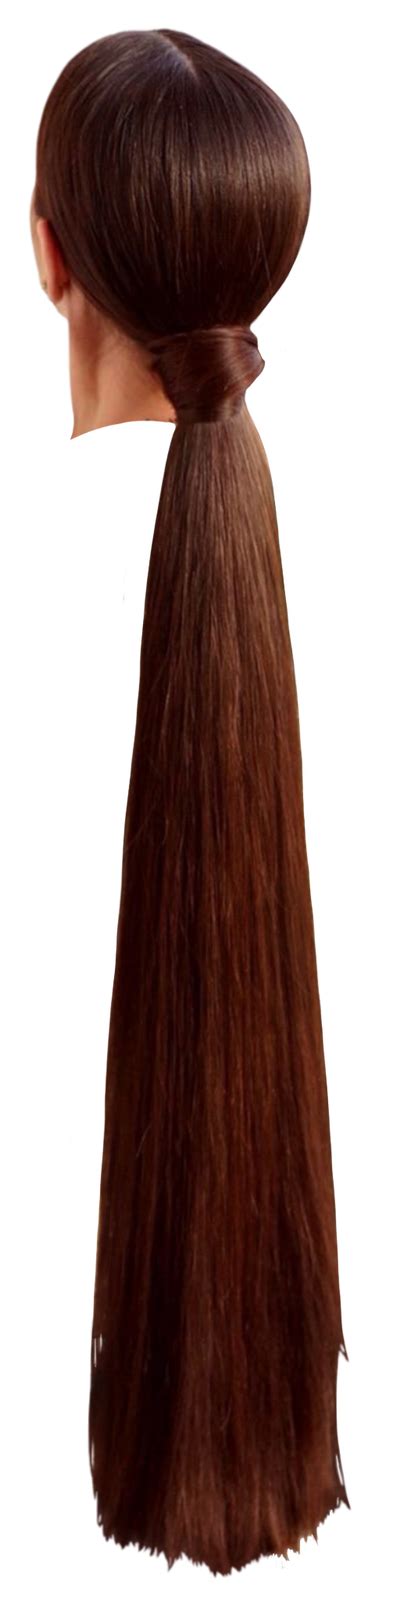 Girl Hair Brunette Ponytail Super Long 1 By Pngtransparency On Deviantart